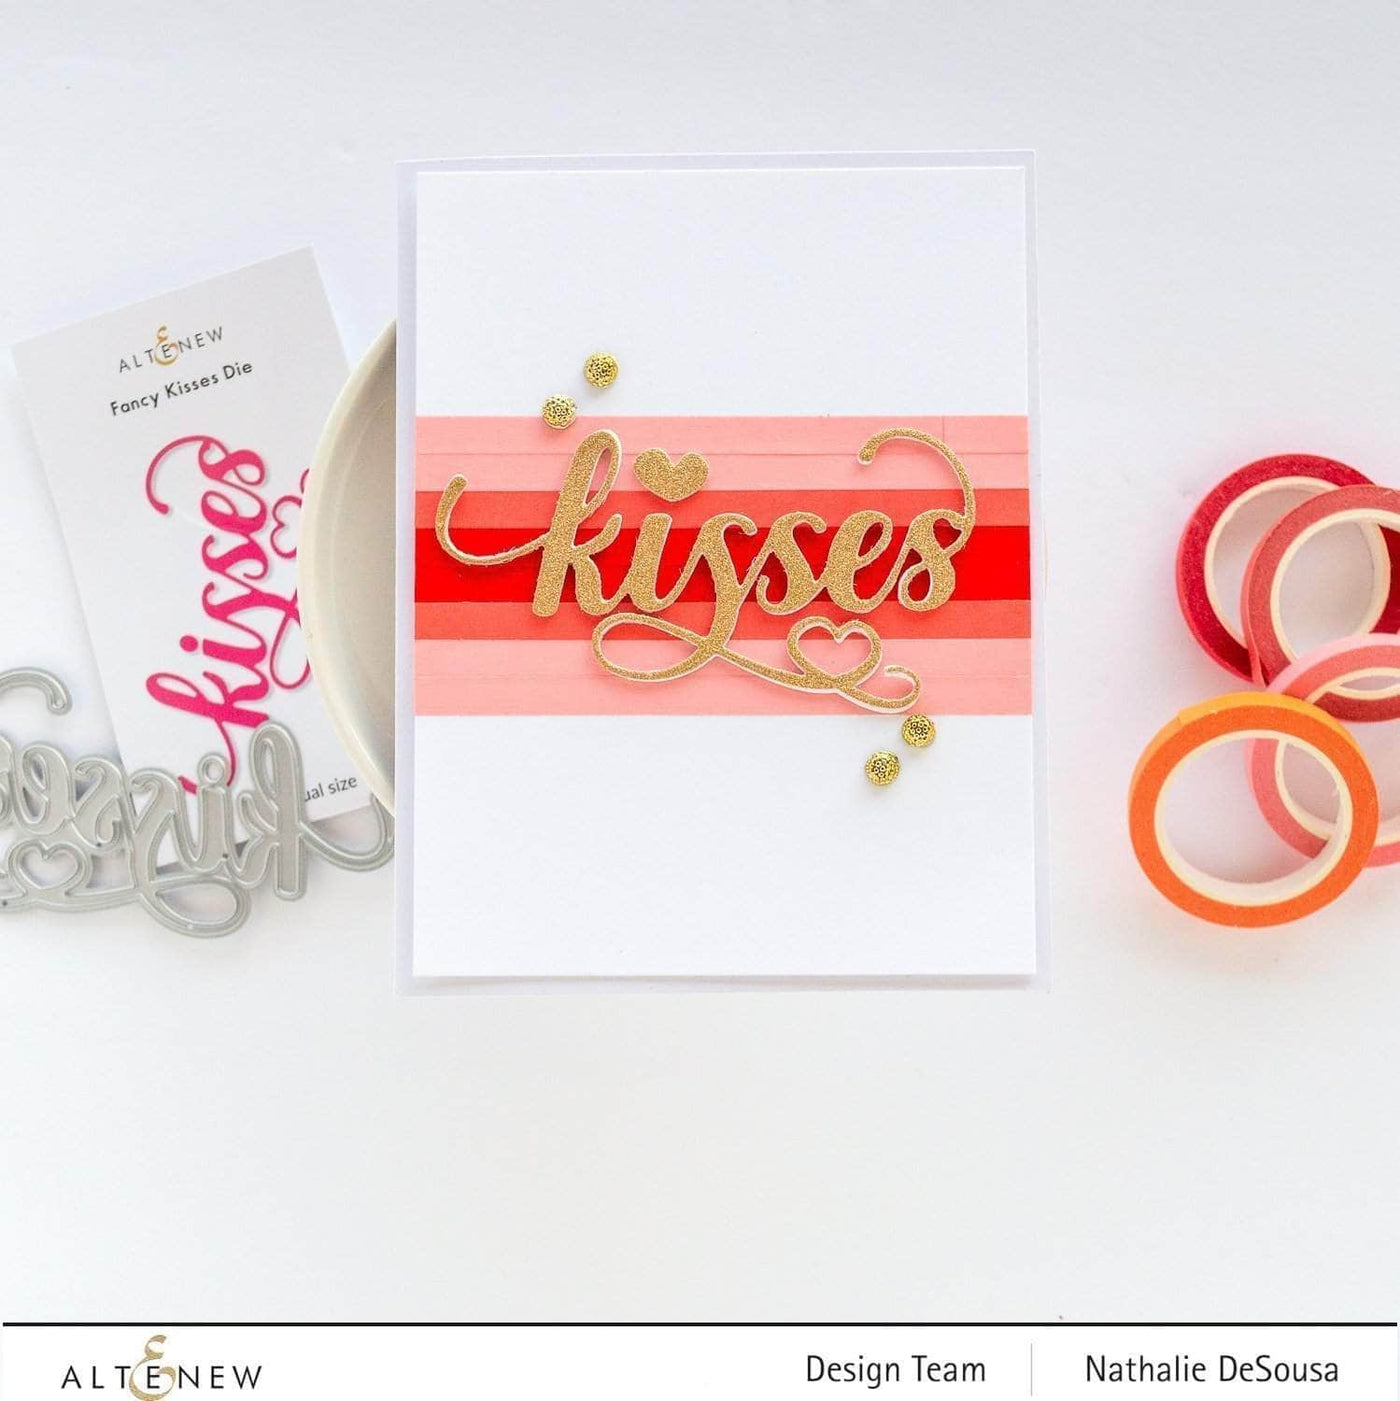 Altenew Creativity Kit Bundle A Love for Blossoms Creativity Cardmaking Kit